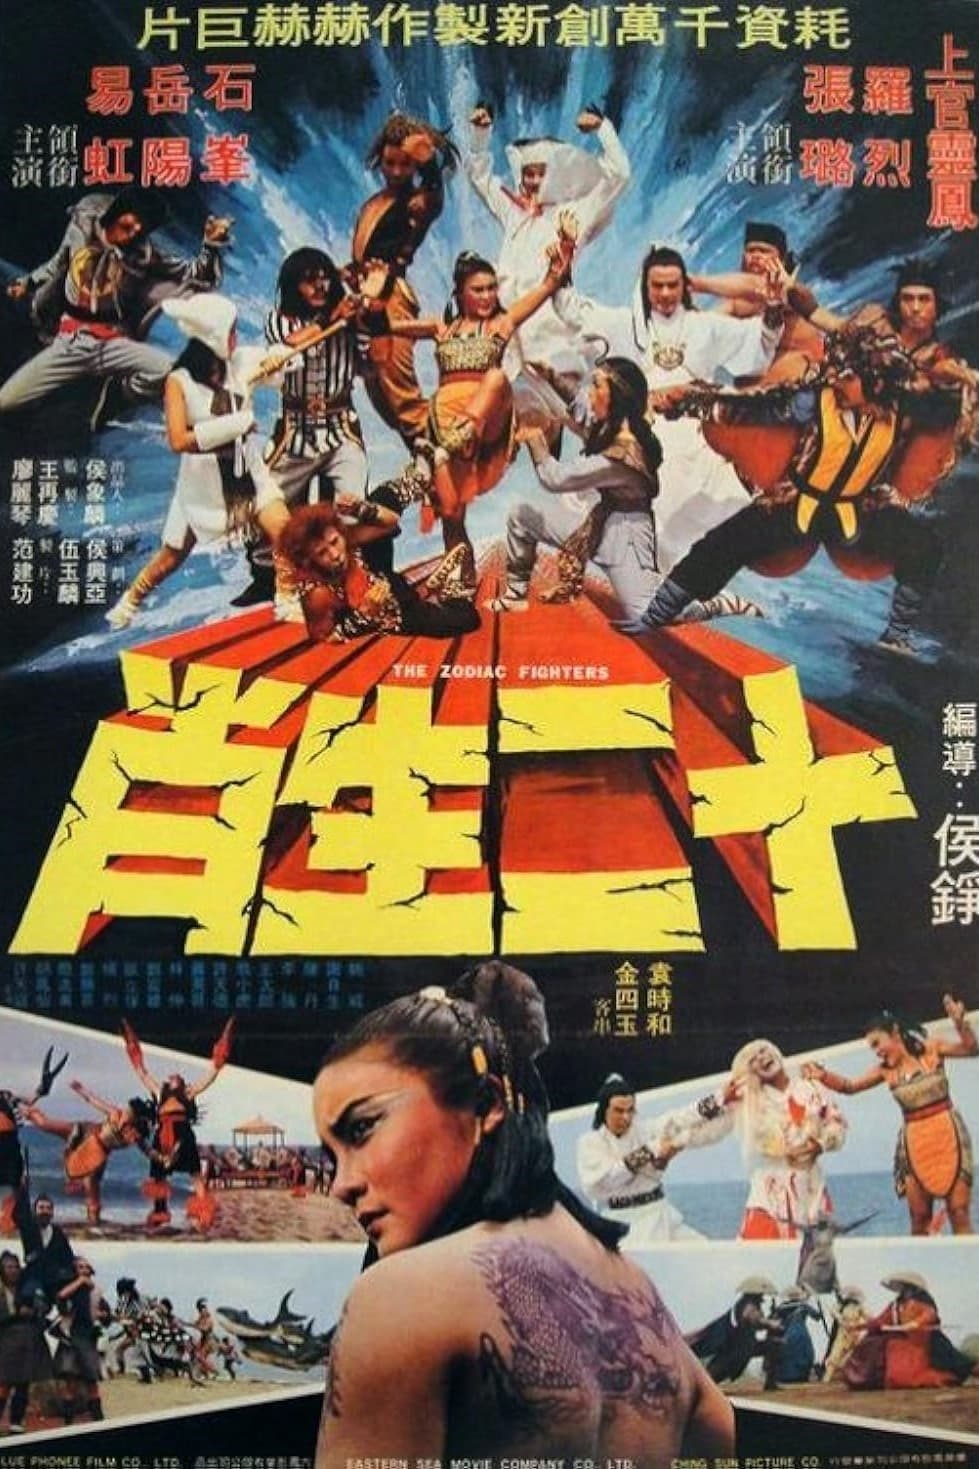 The Zodiac Fighters (1978)